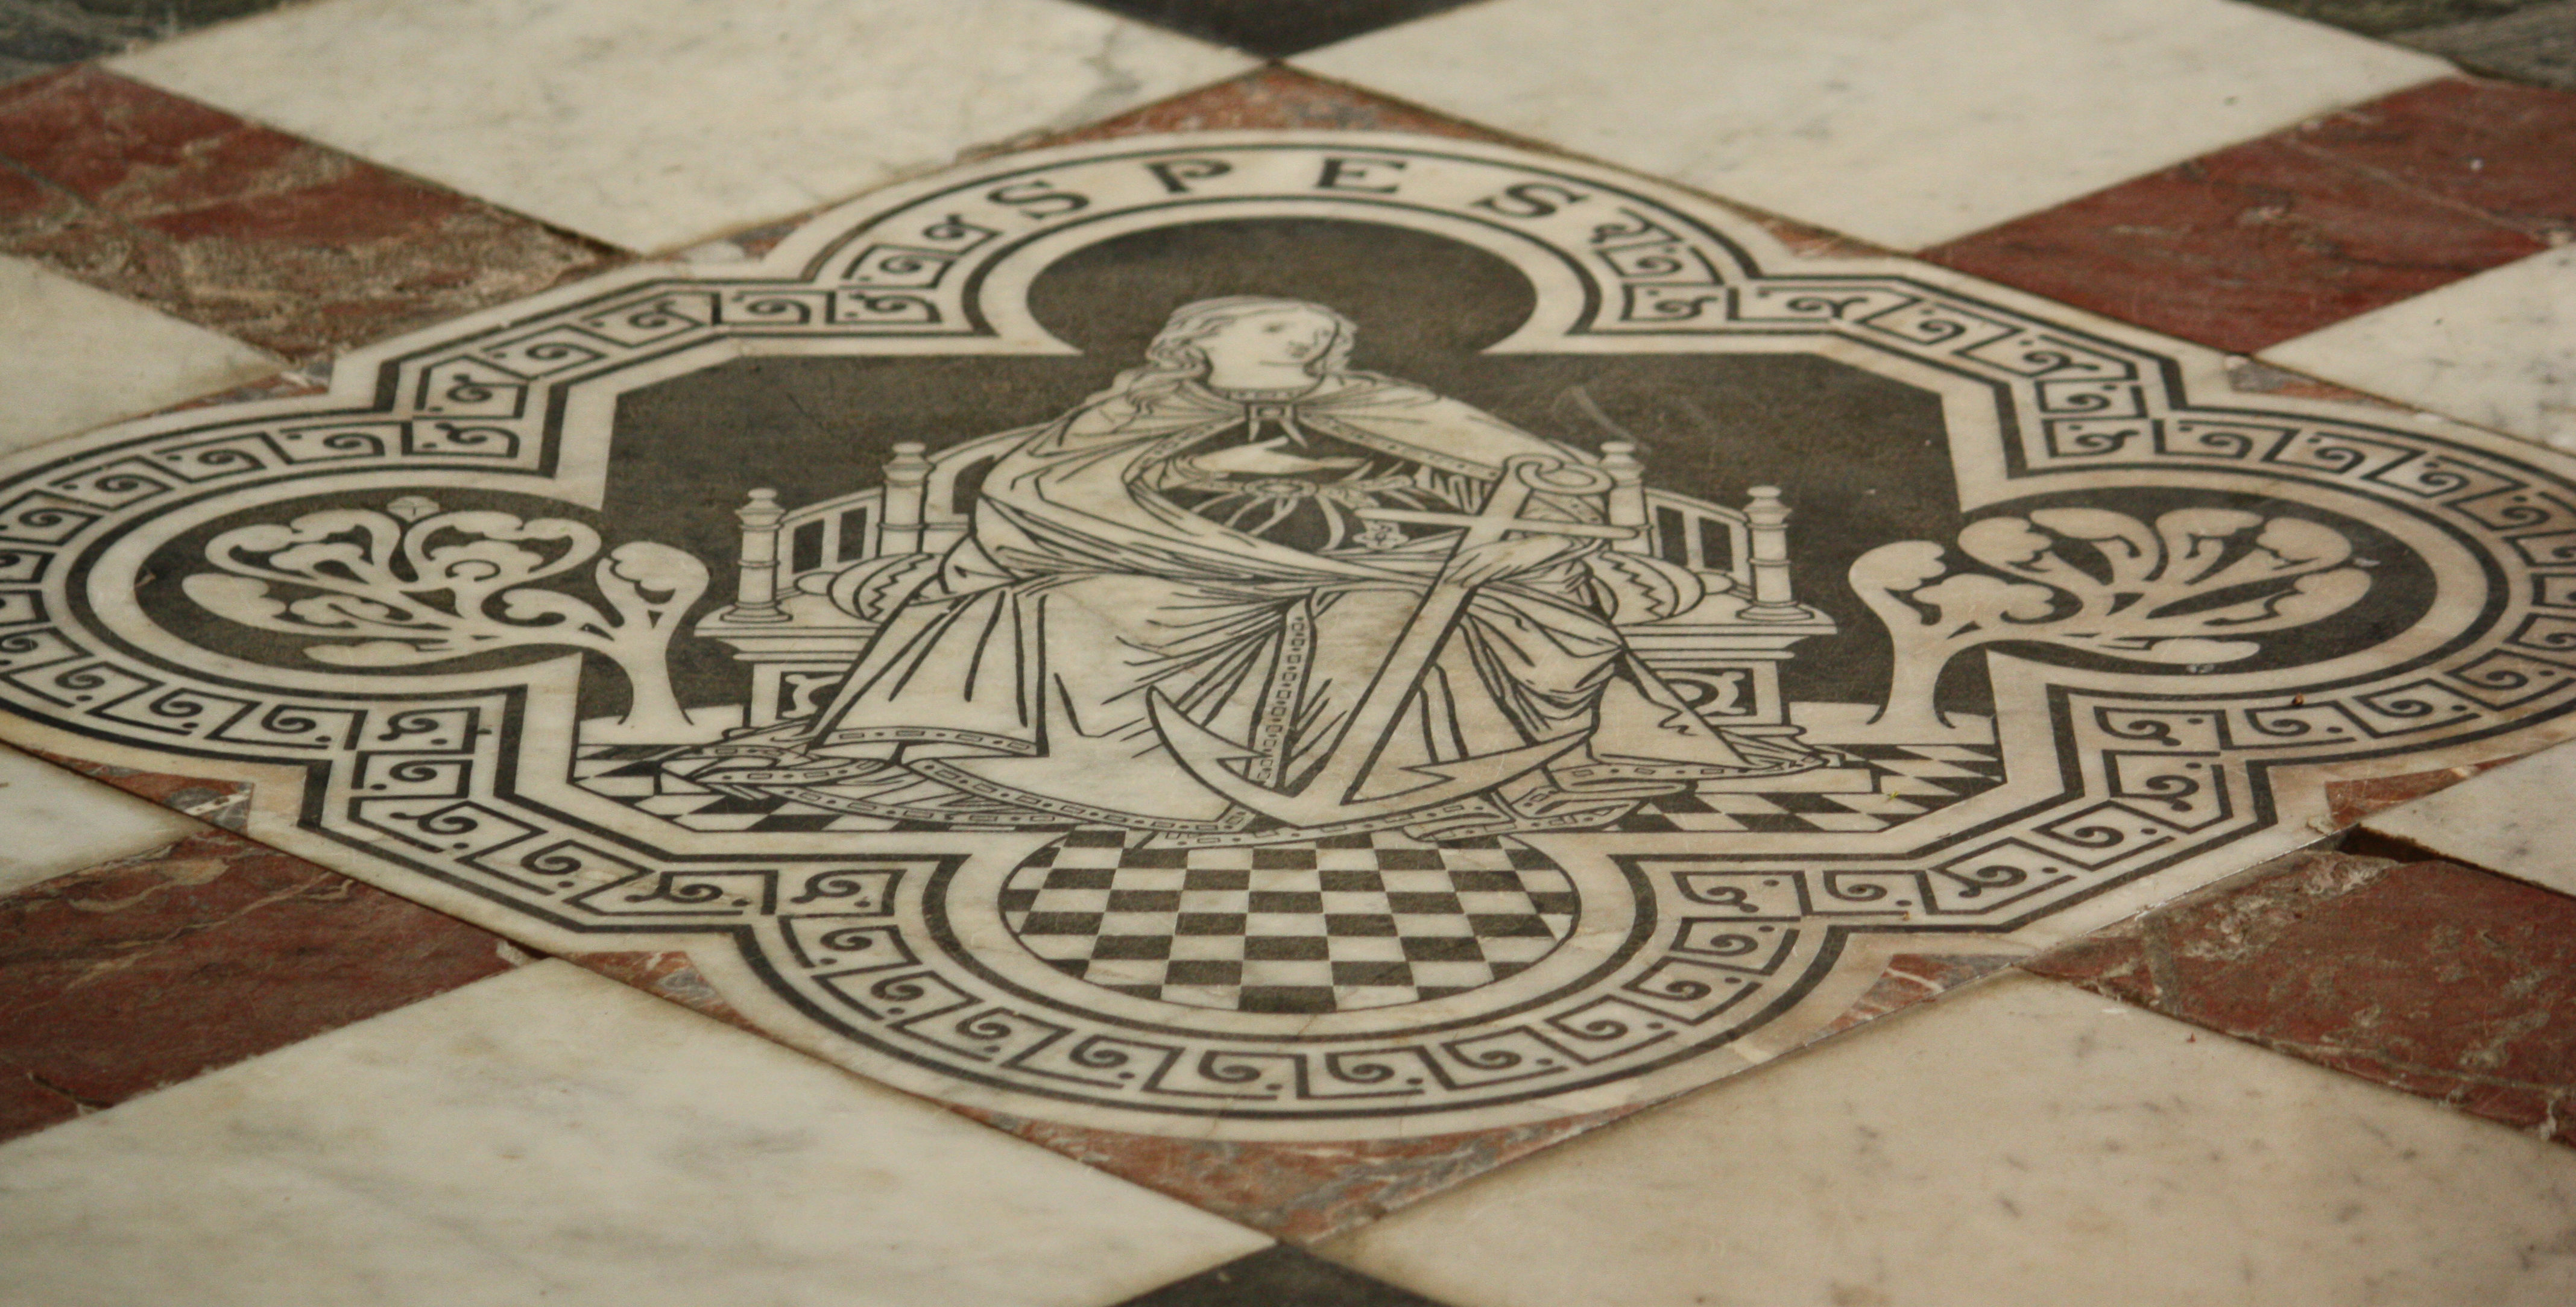 "Spes" in a marble floor